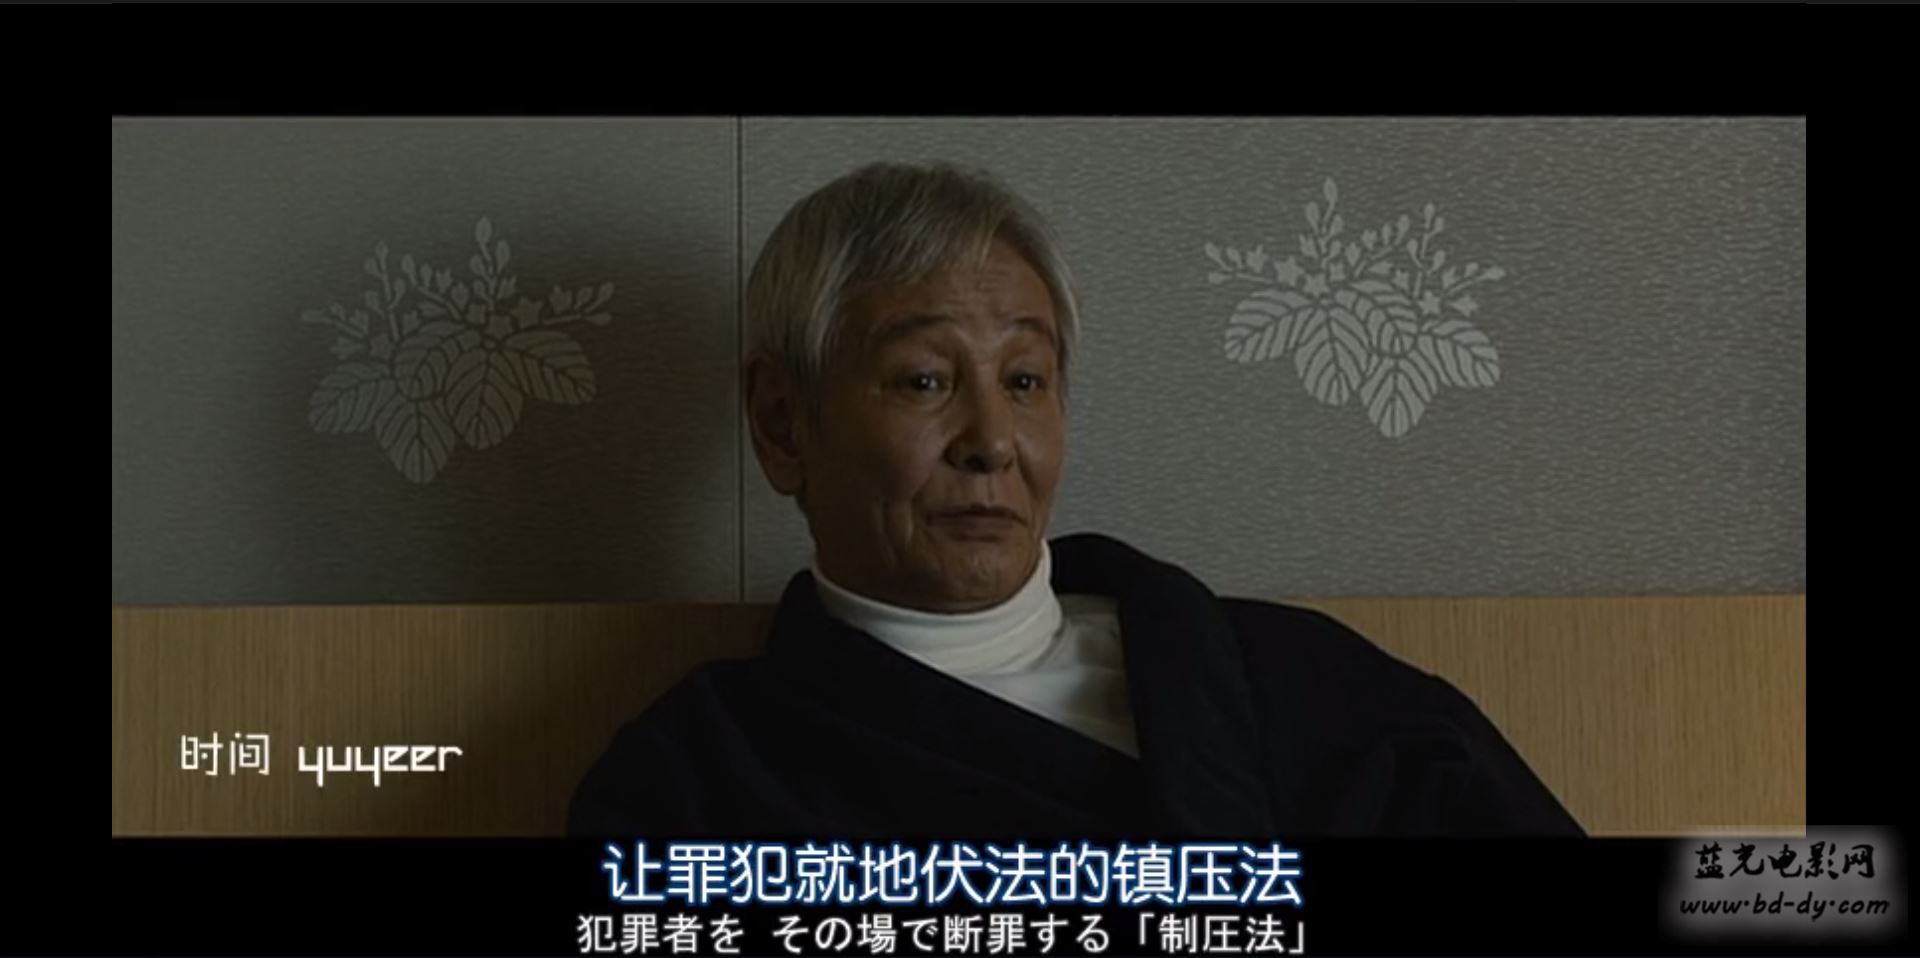 《S-最后的警官 电影版》2015日本动作犯罪.DVD.中日双字截图;jsessionid=tB9iH0MbZBA-ISgH3XetJN1wP6snfK3fGg-sXQtz